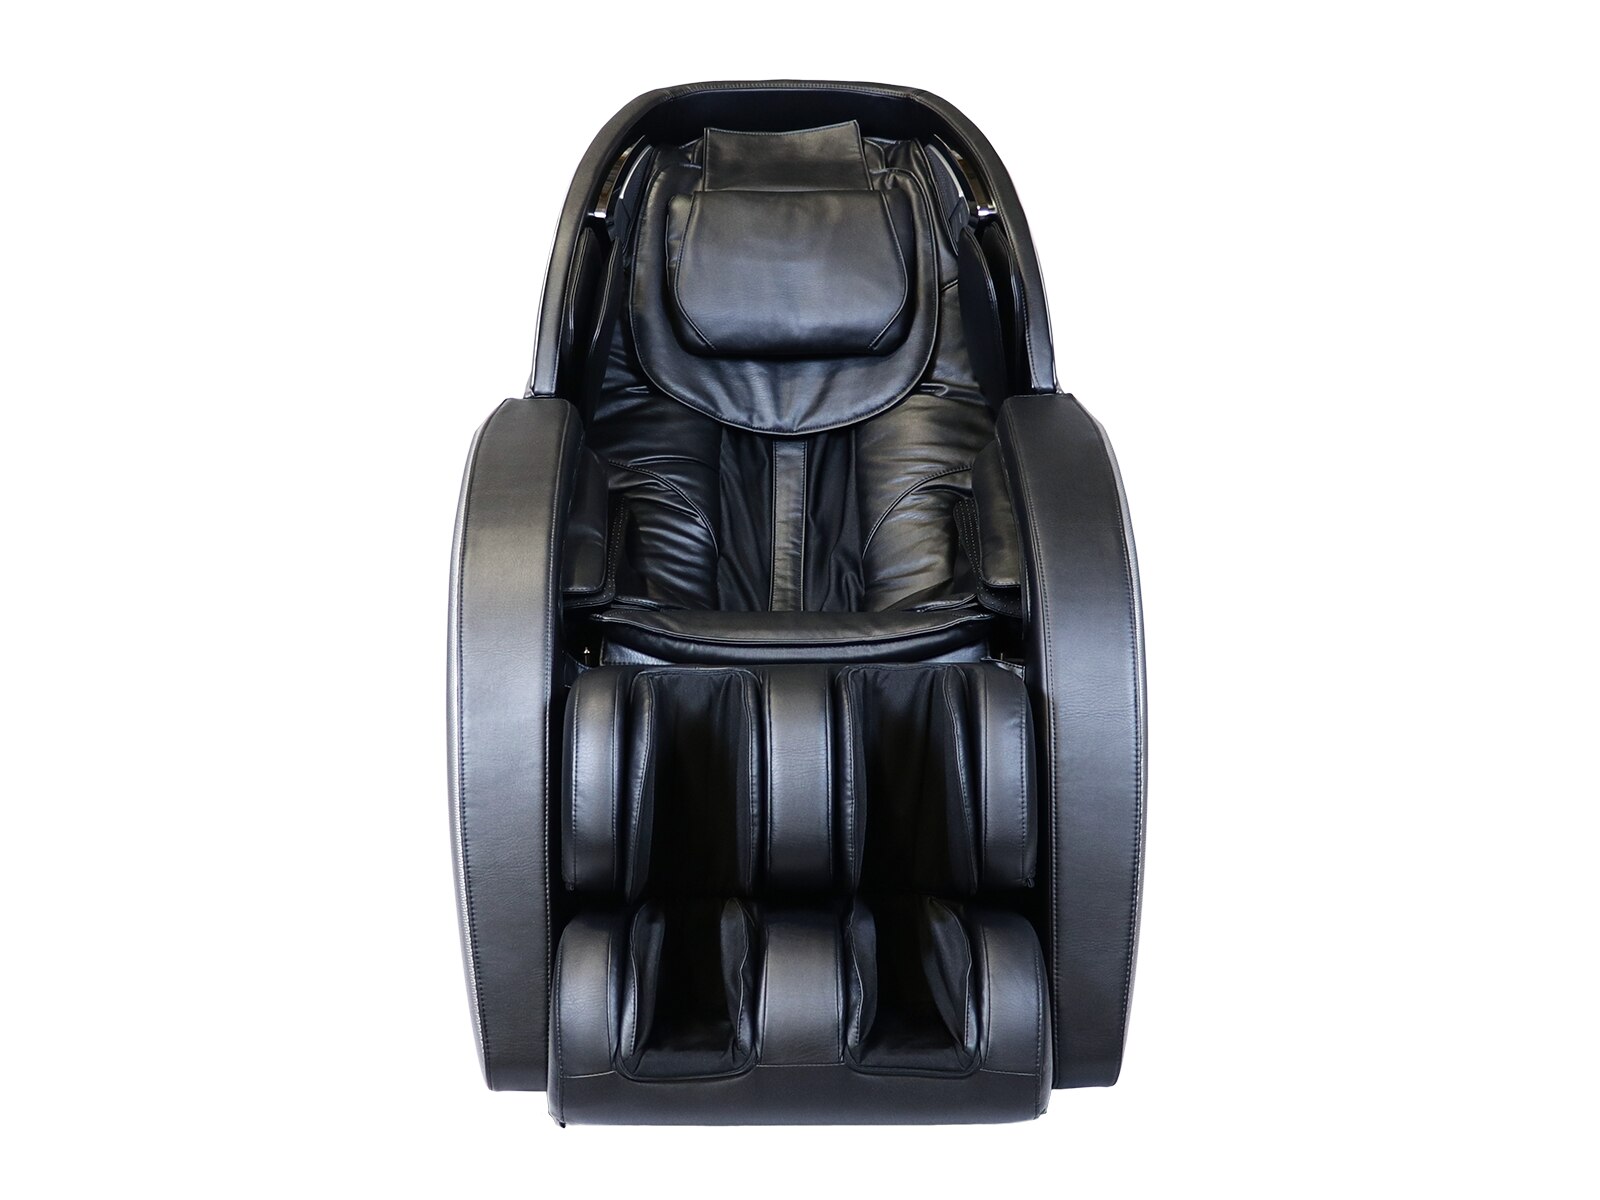 Genesis Max Massage Chair